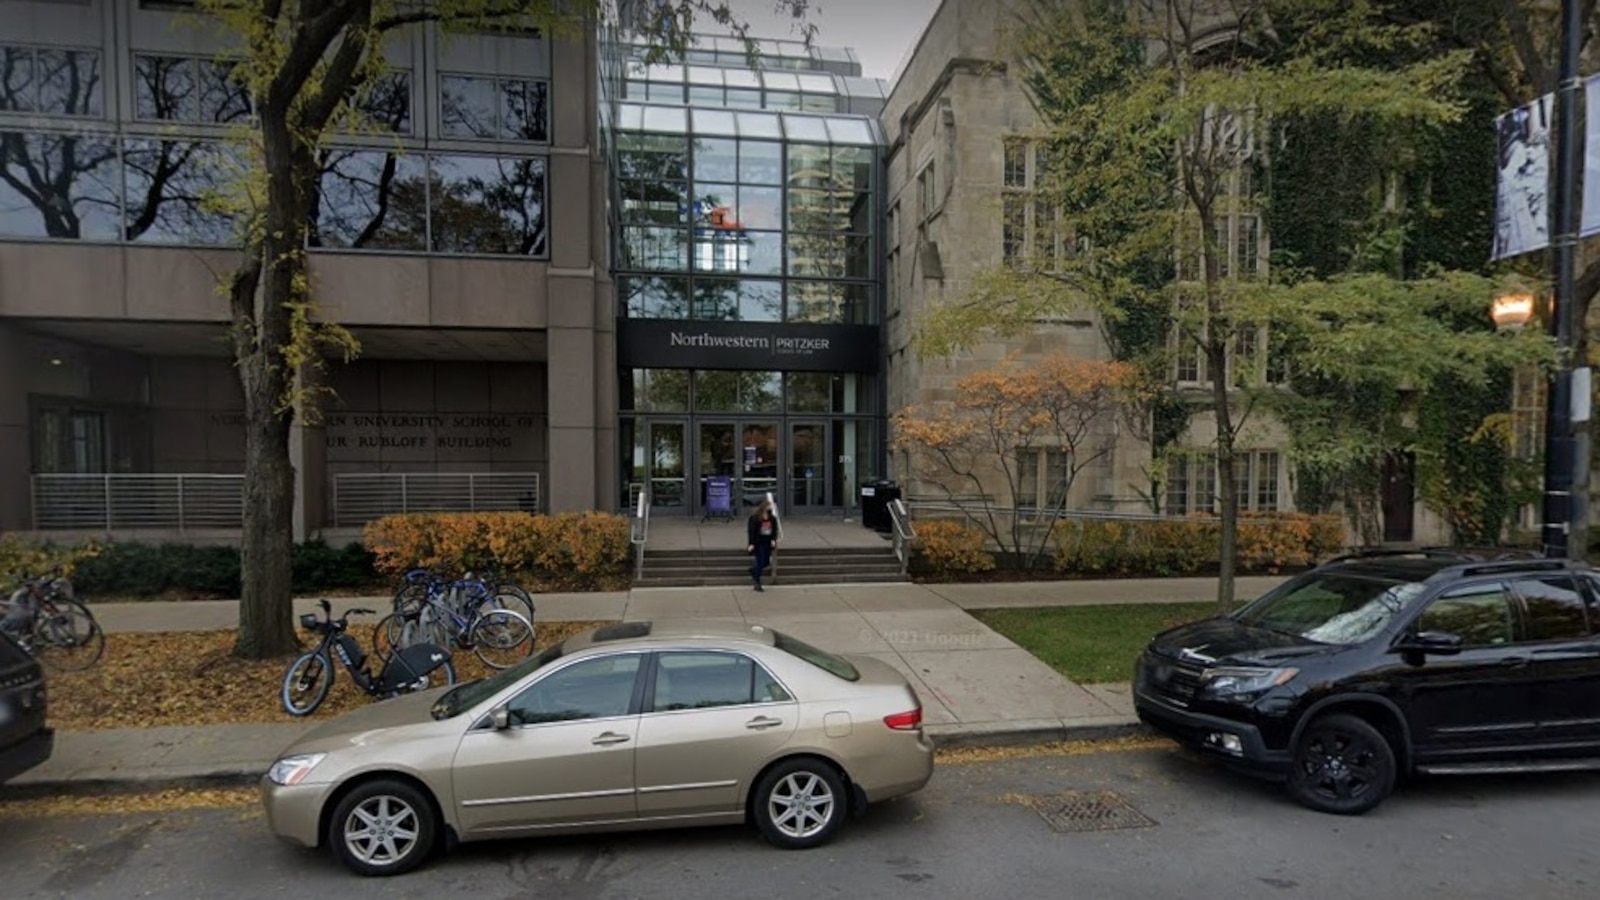 Allegations of Bias in Northwestern Law School's Hiring Practices Against White Men